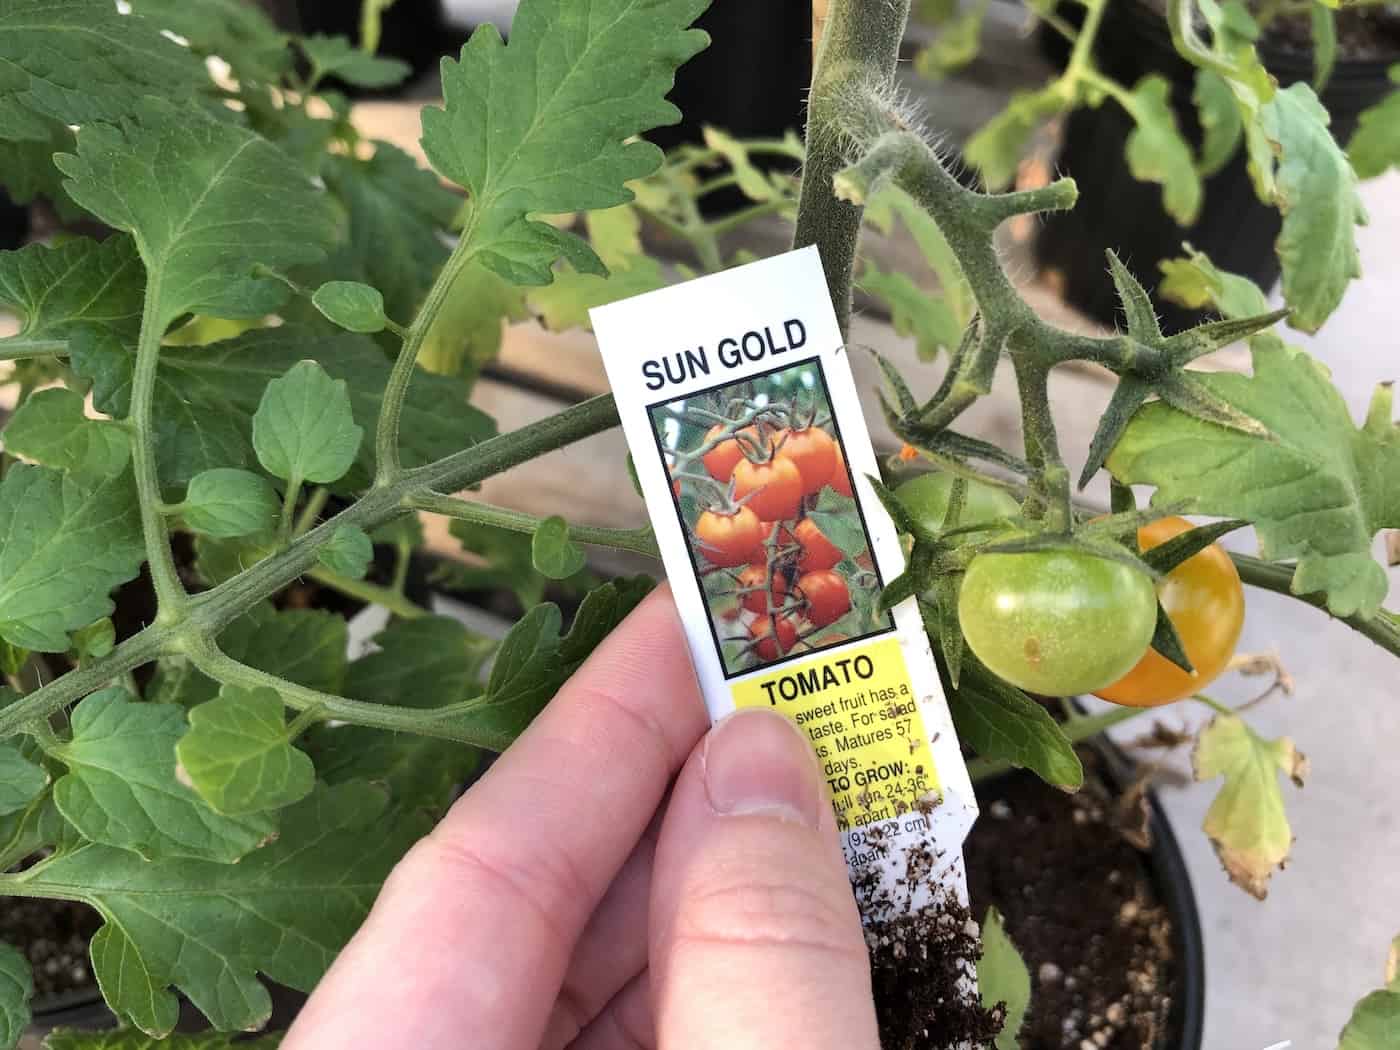 Sun gold tomato plant seedling